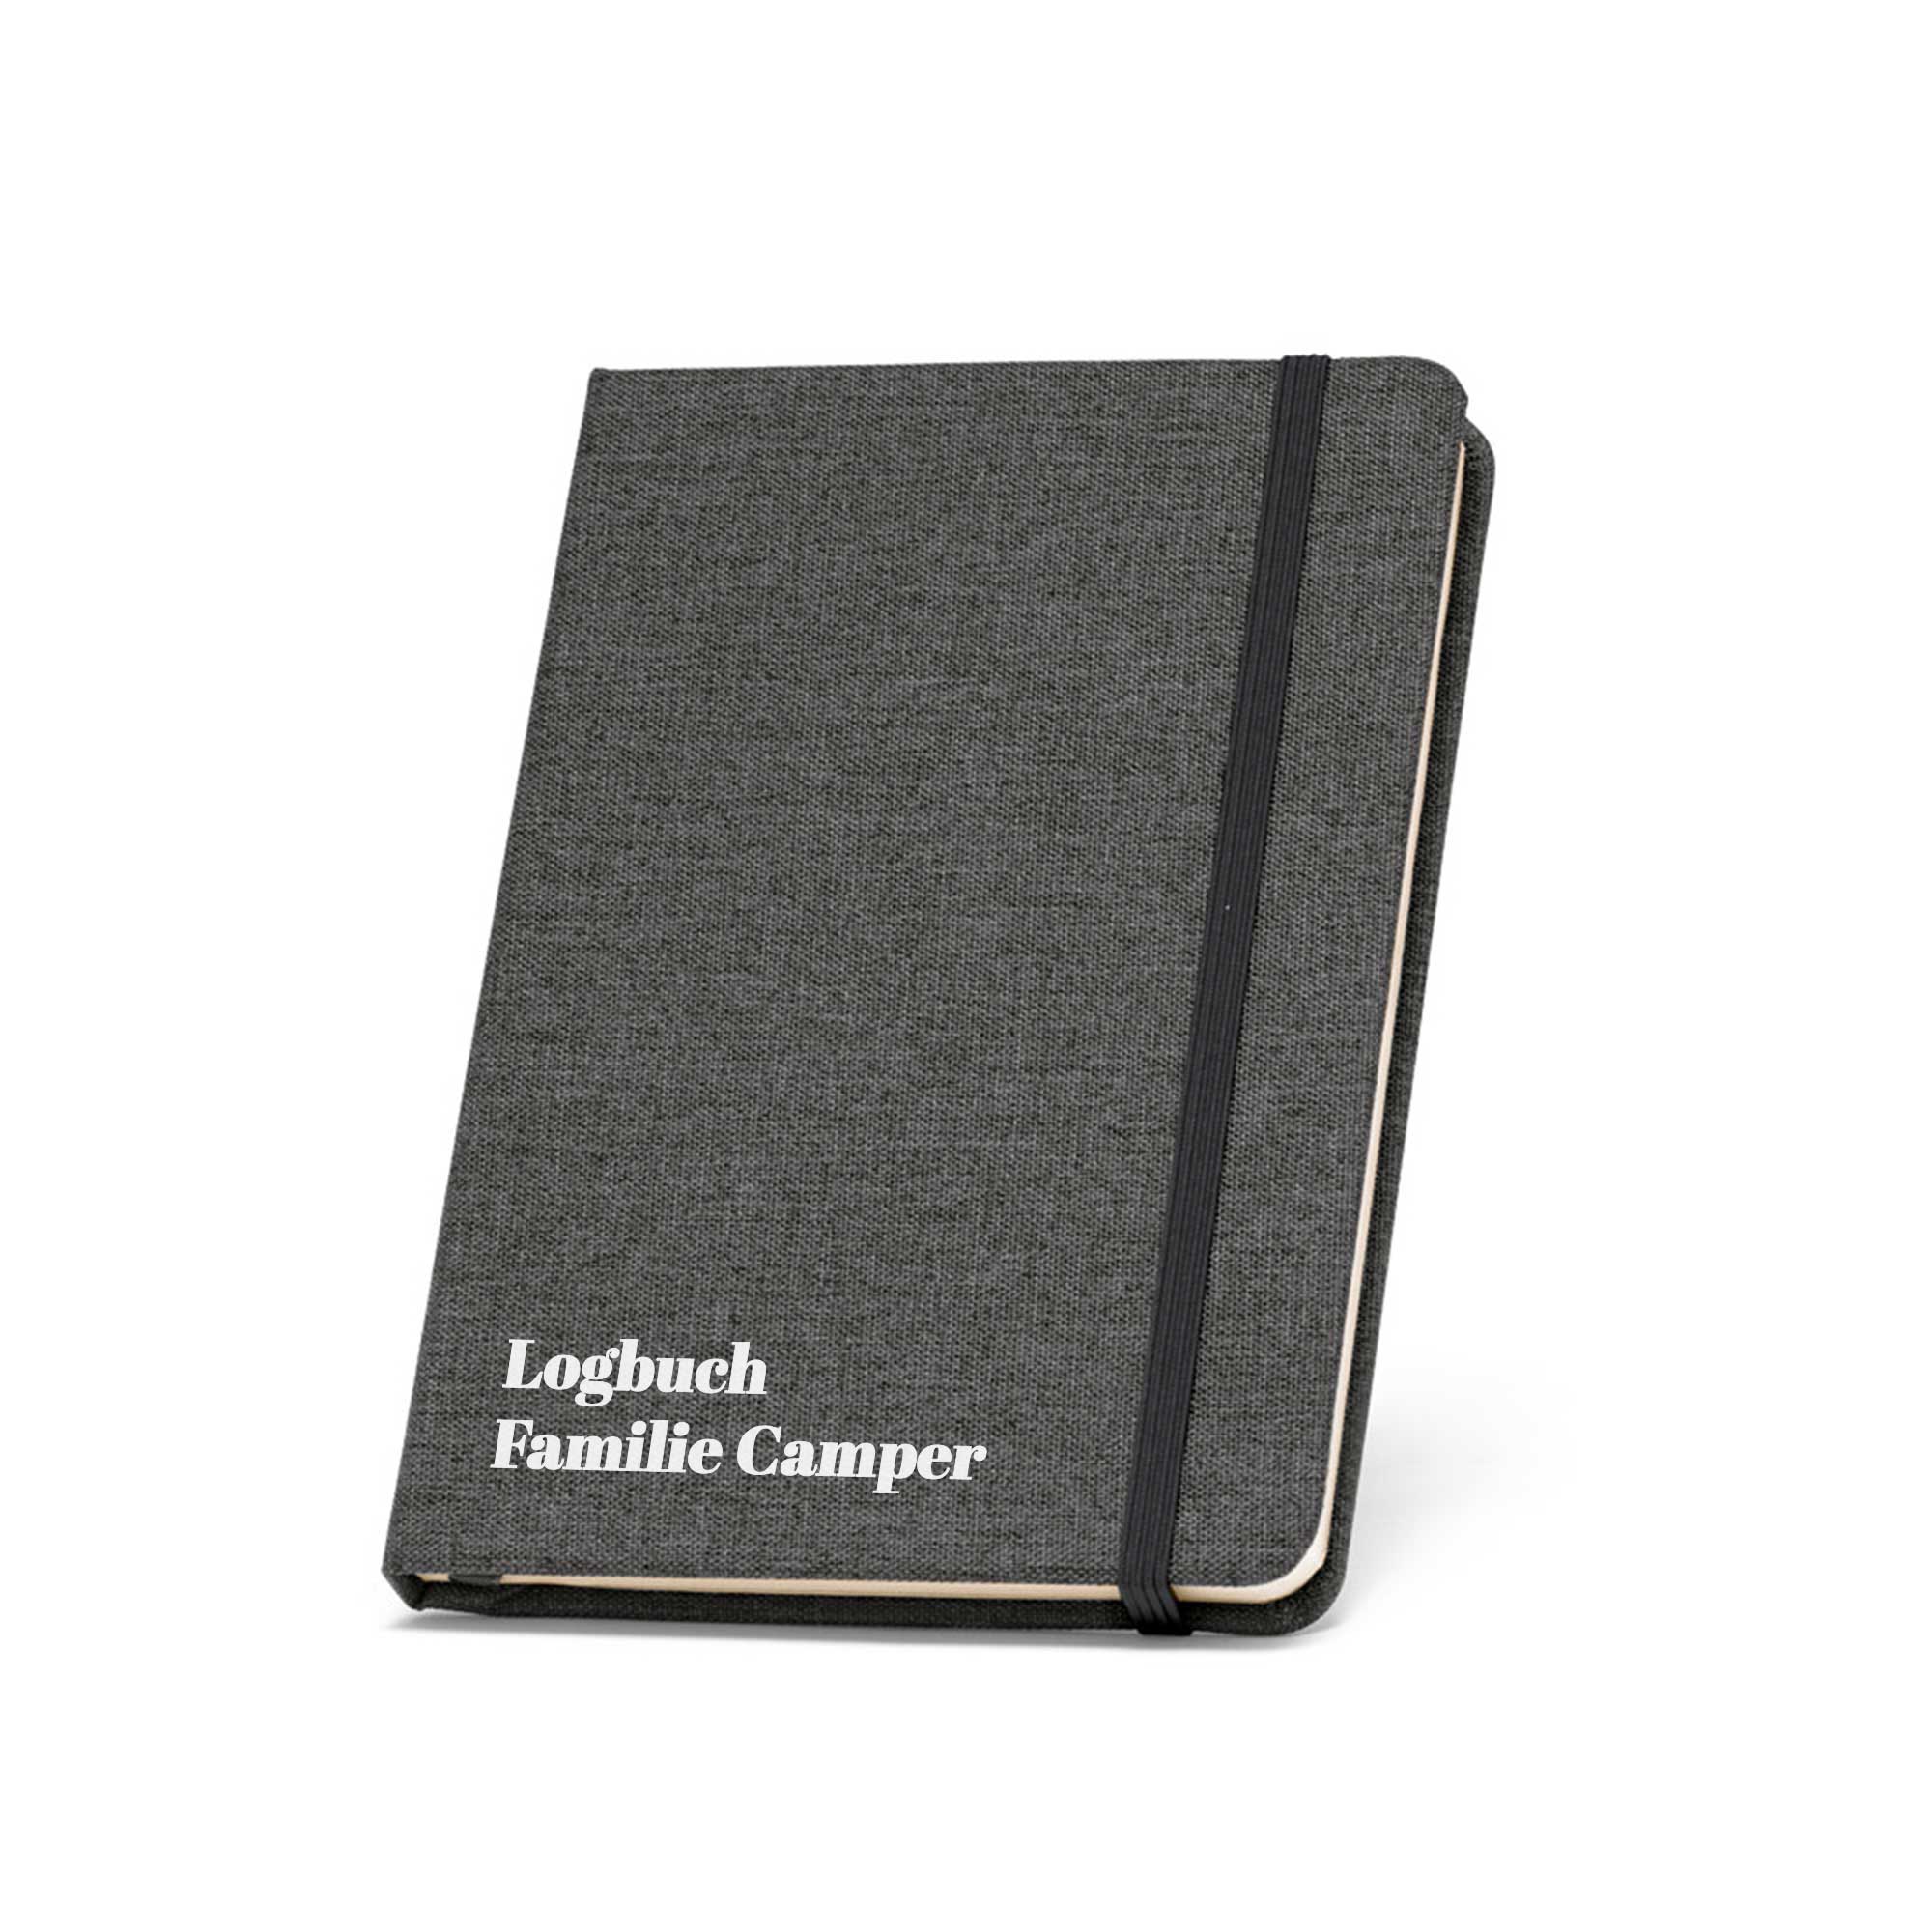 Personal logbook